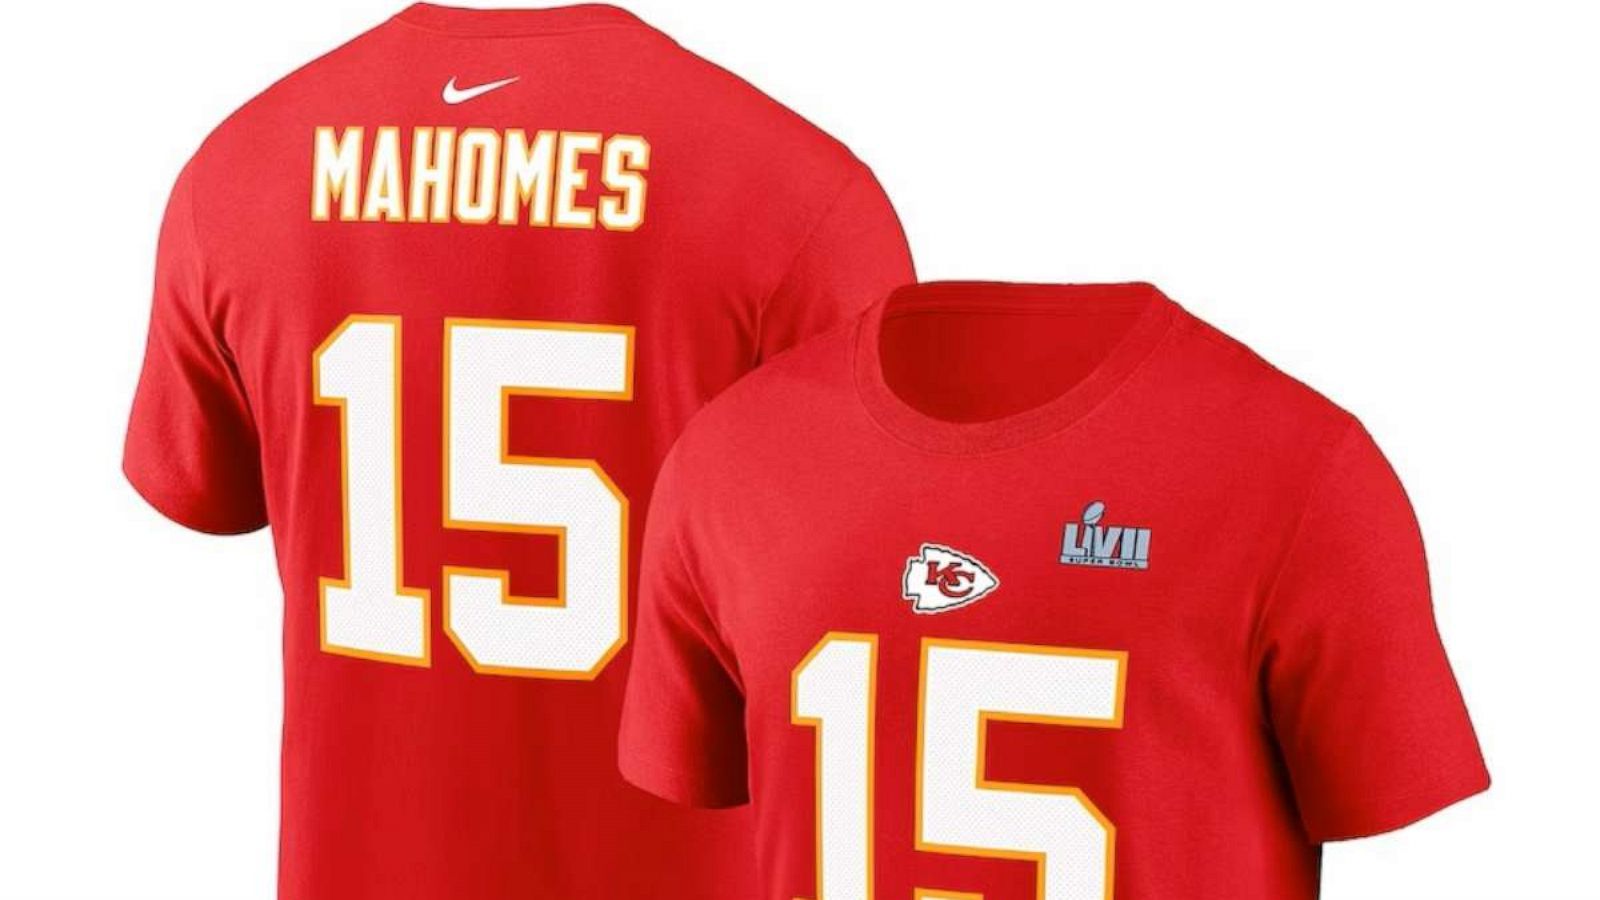 Shop Kansas City Chiefs gear to celebrate their Super Bowl win